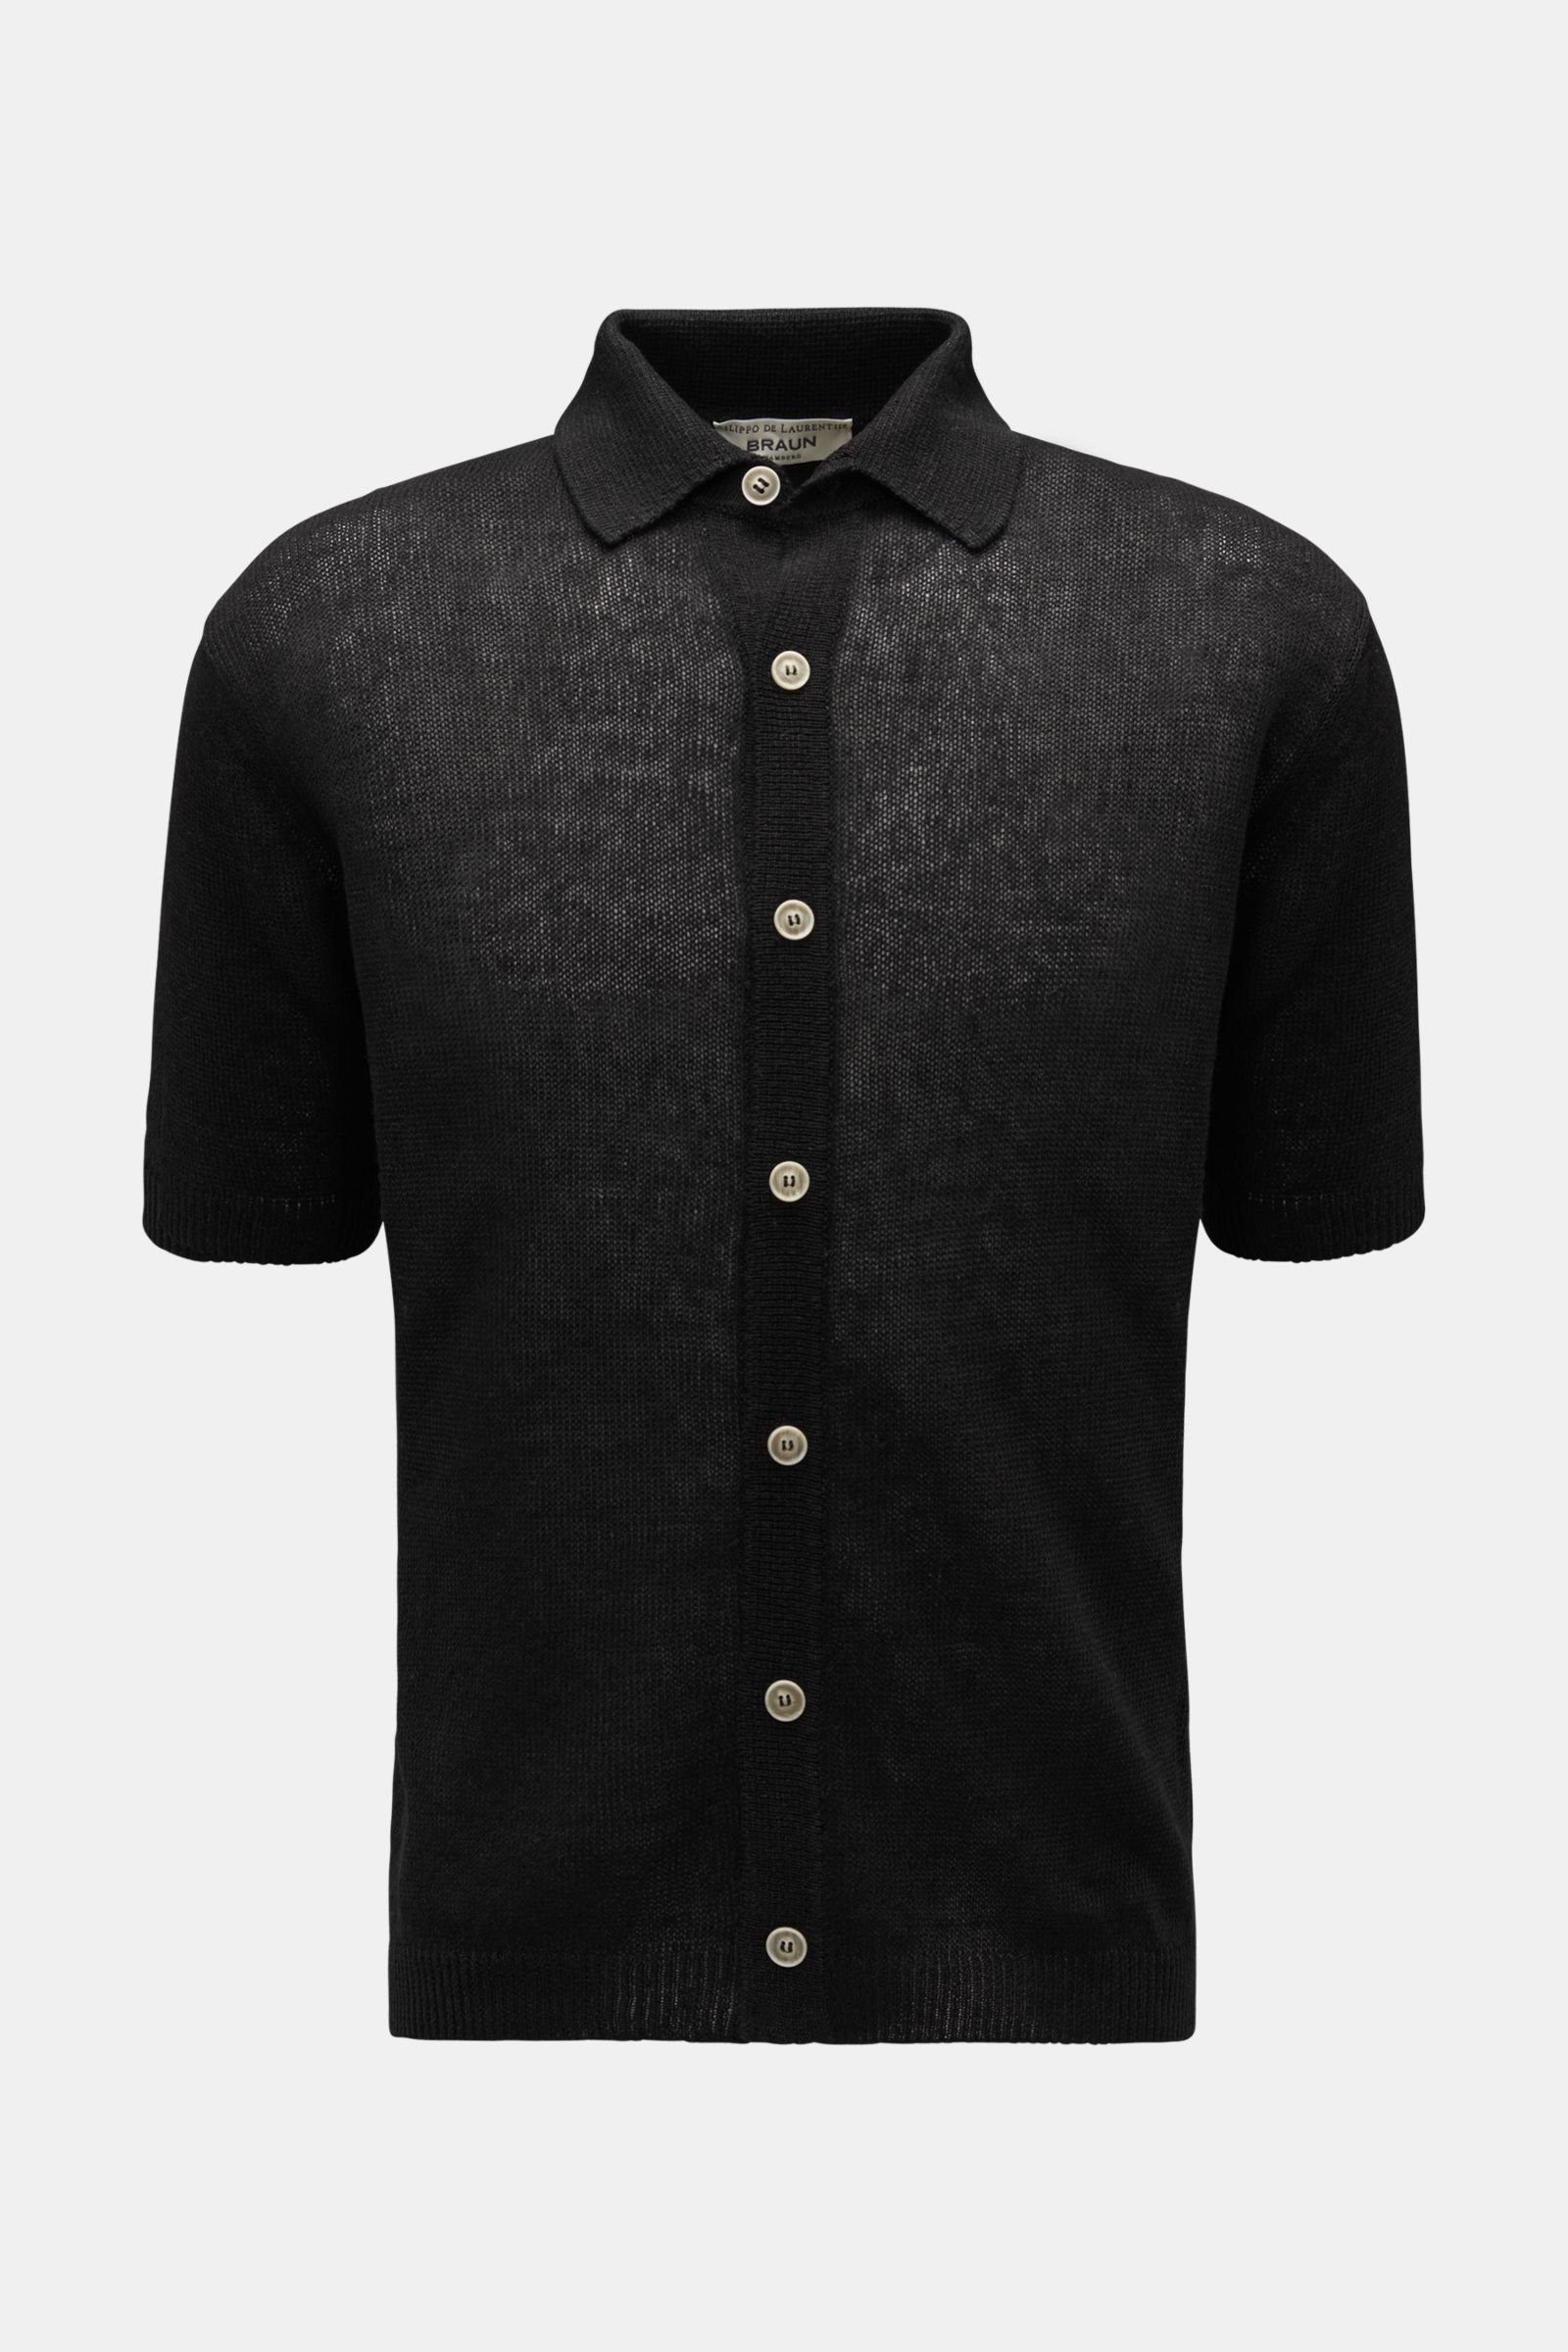 Short sleeve knit shirt narrow collar black